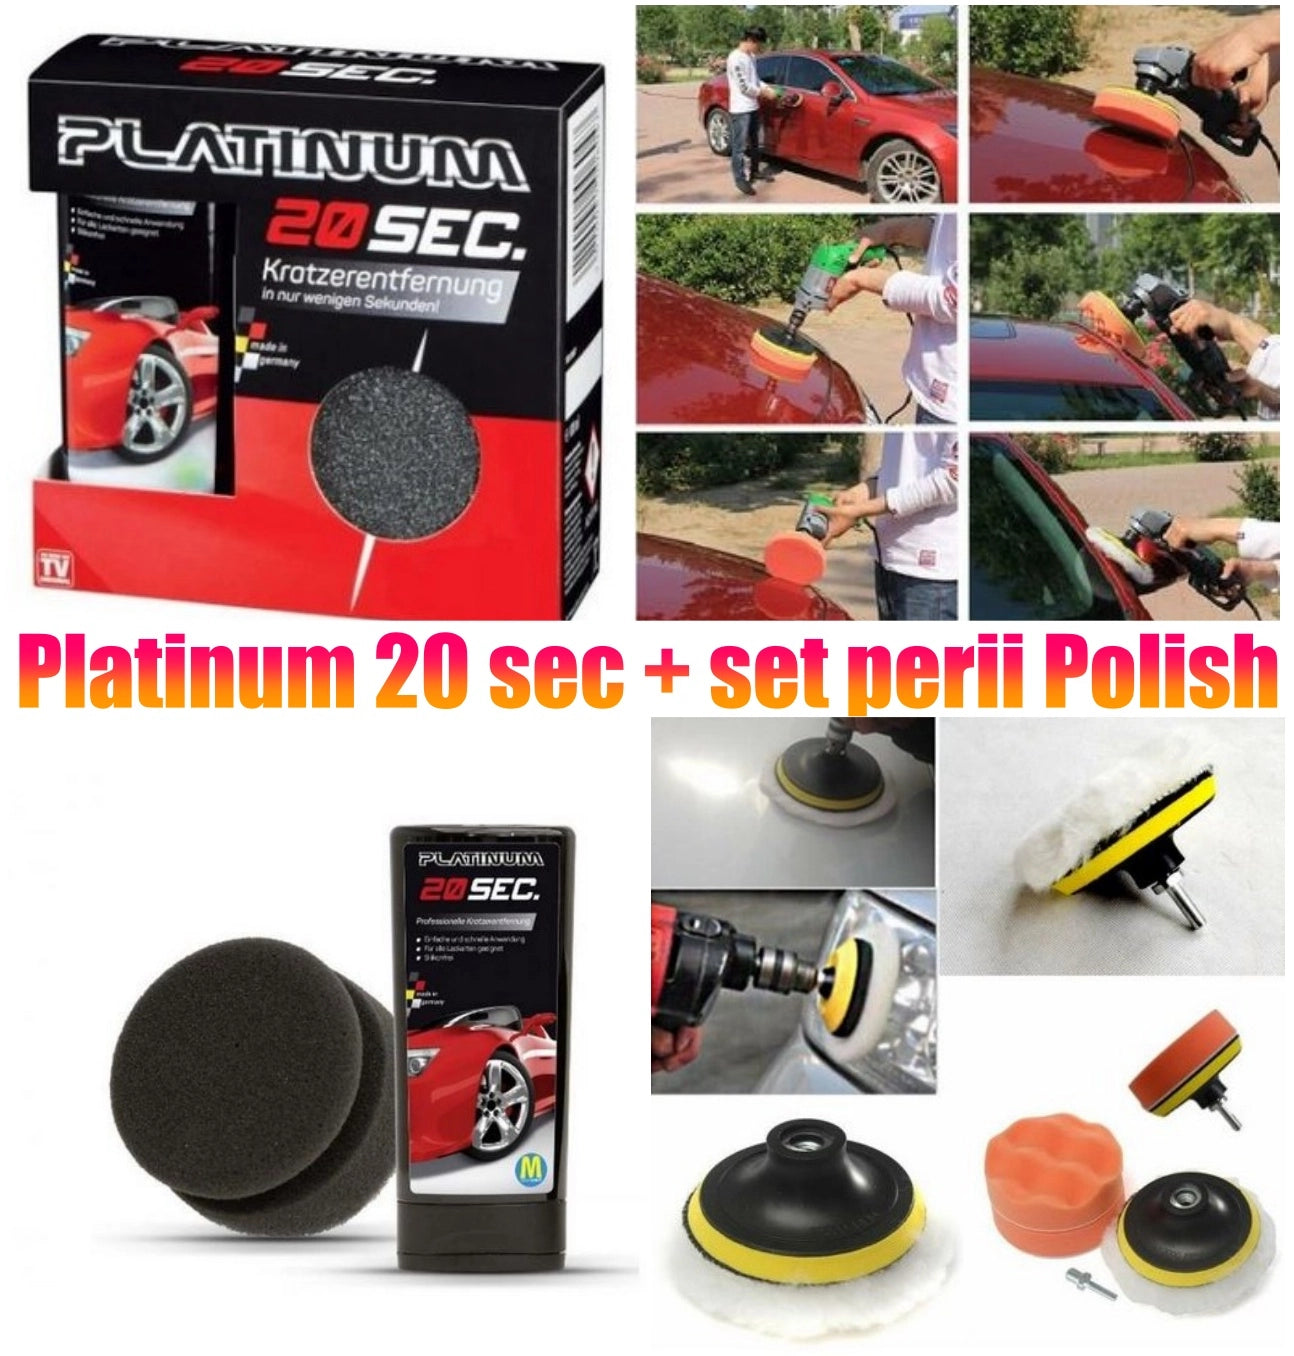 Platinum 20 sec + set perii Polish